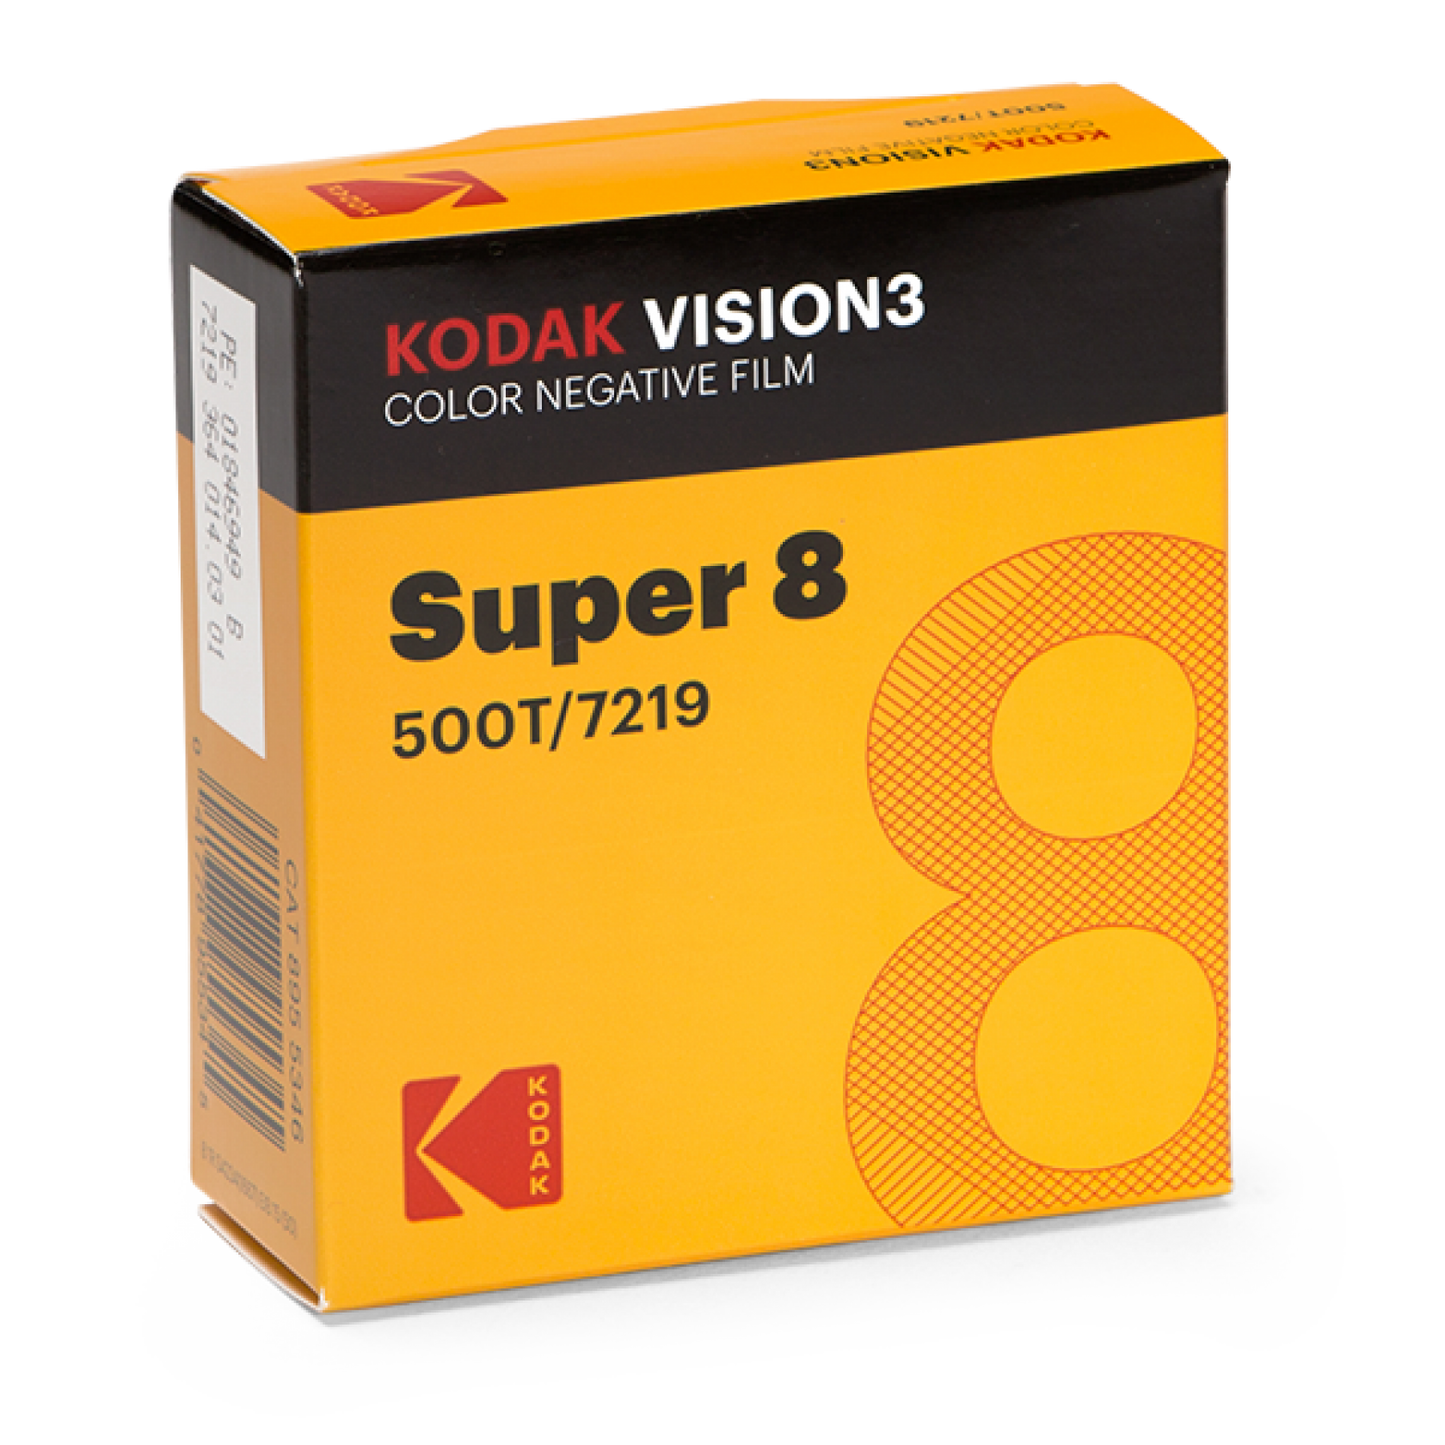 Kodak Vision3 super 8 film - 500T/7219